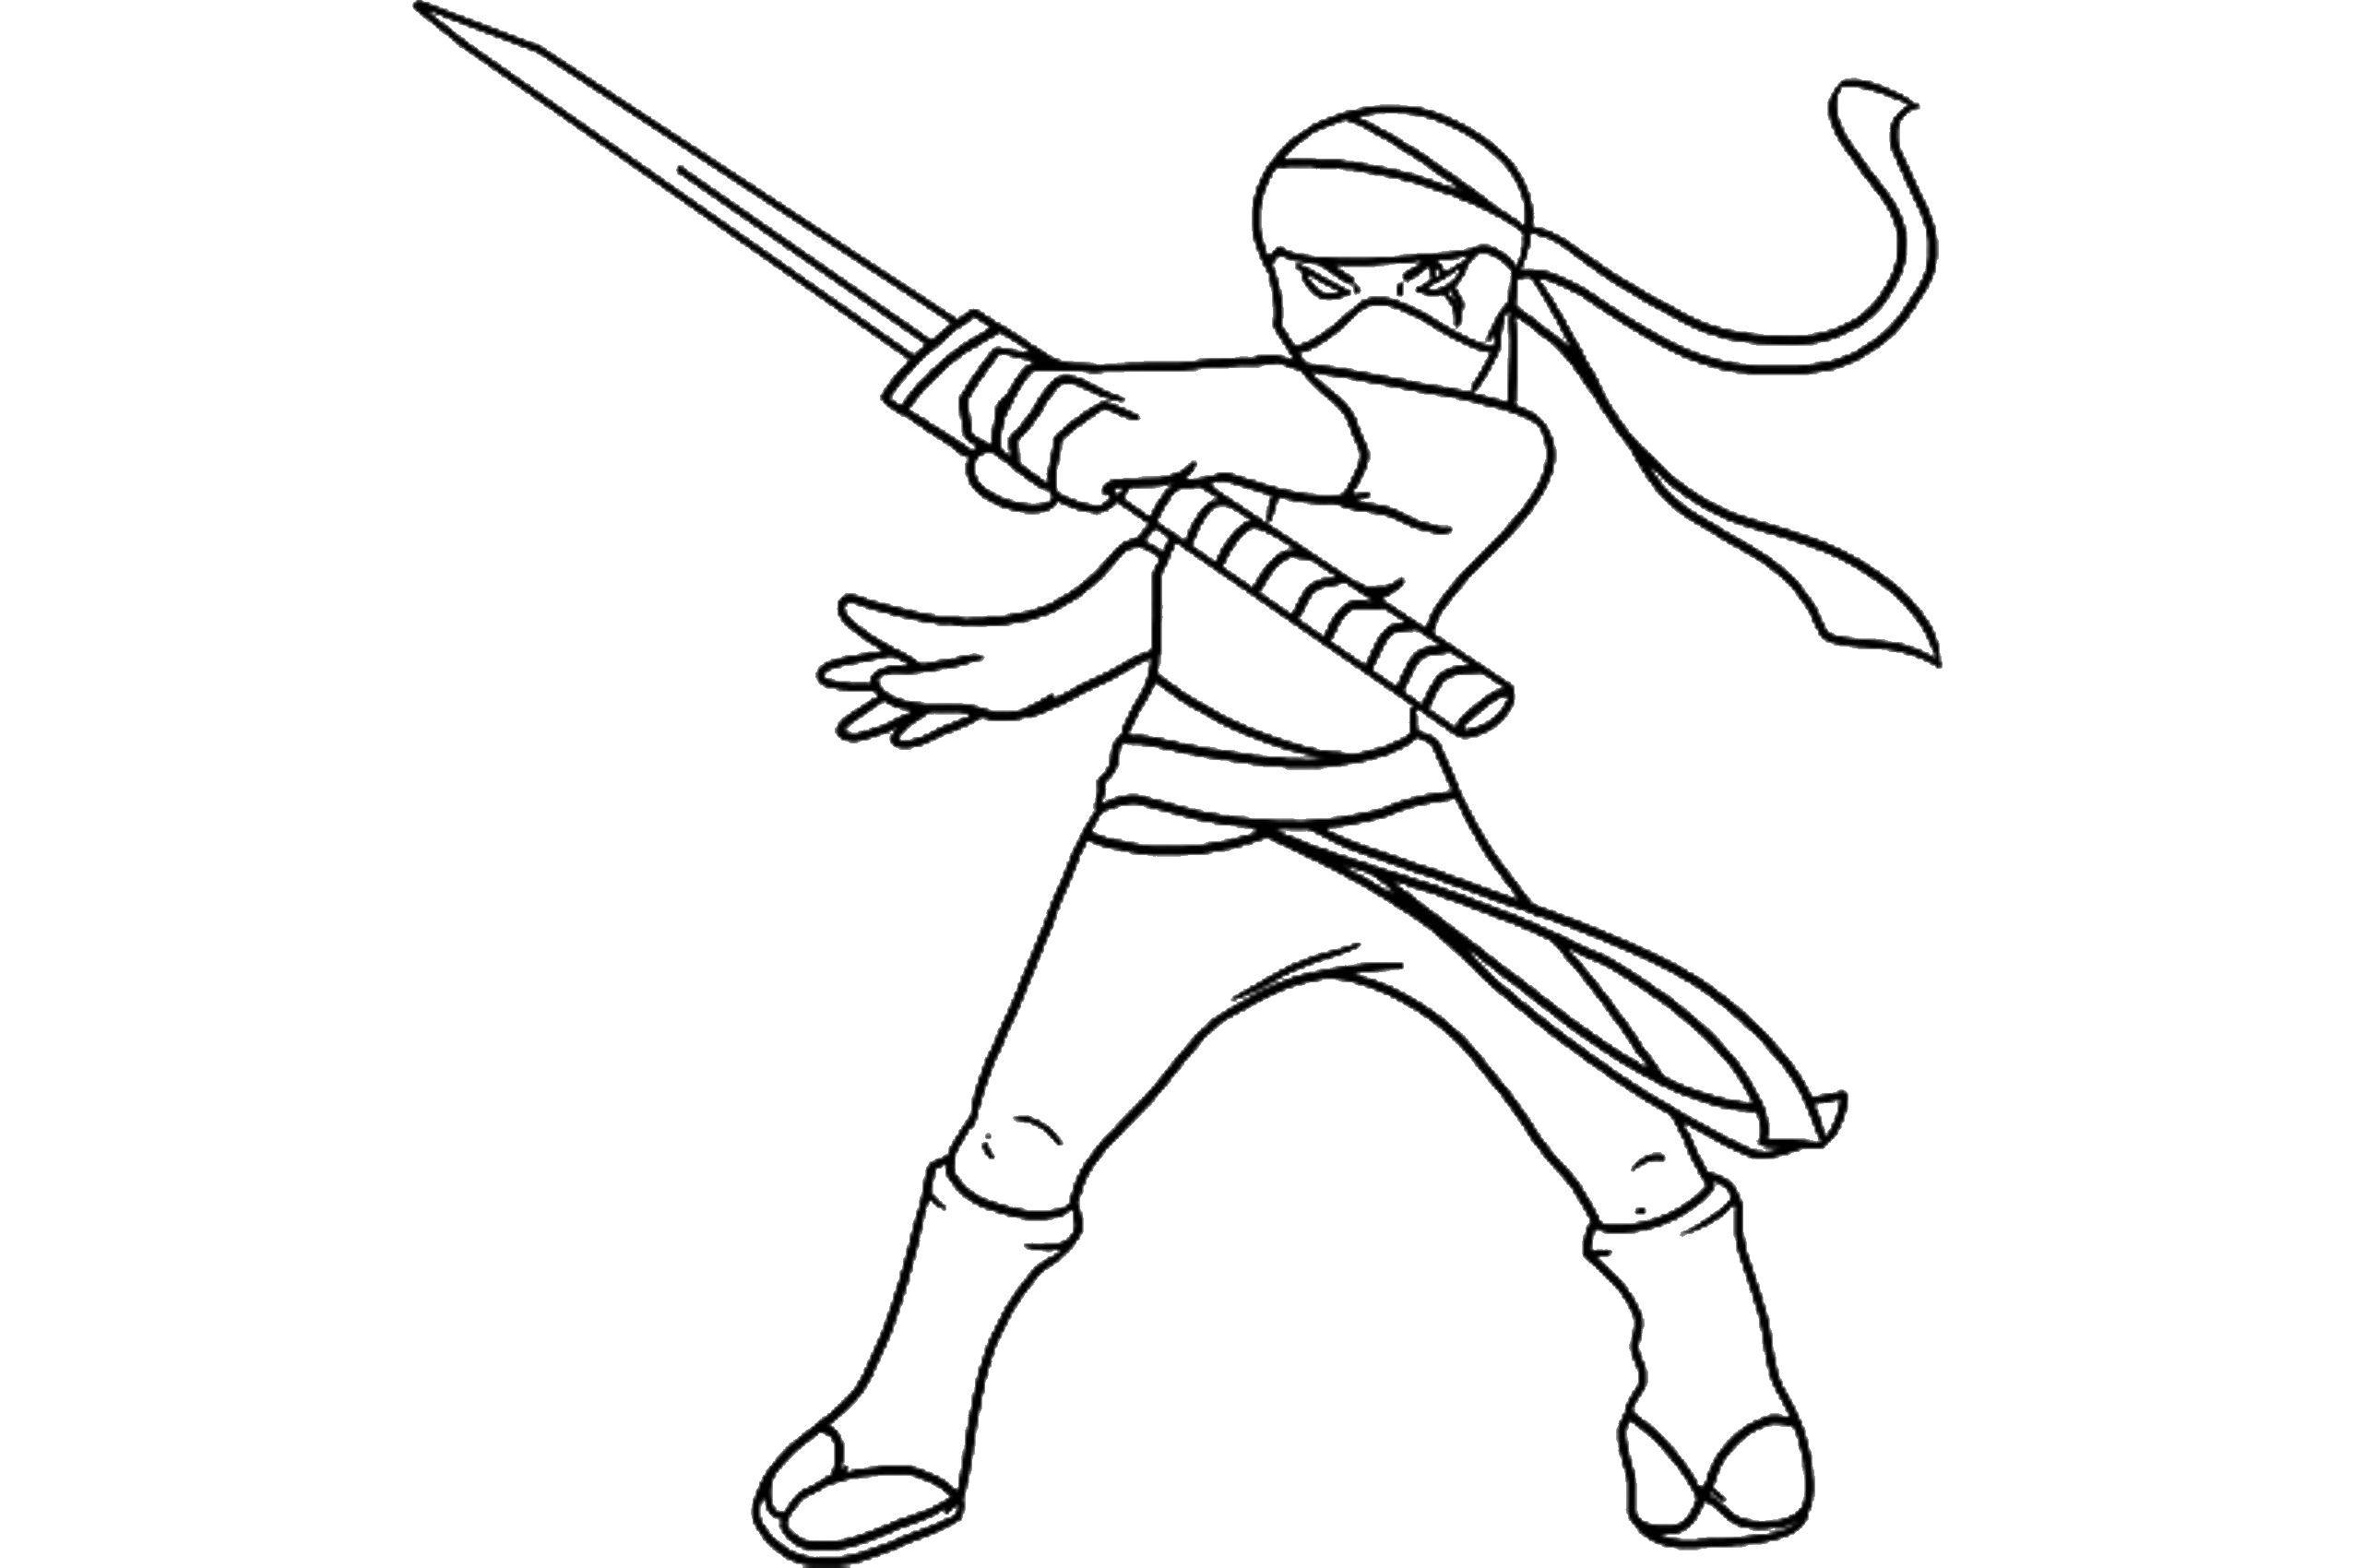 Coloring Ninja. Category ninja . Tags:  samurai, ninja, sword.